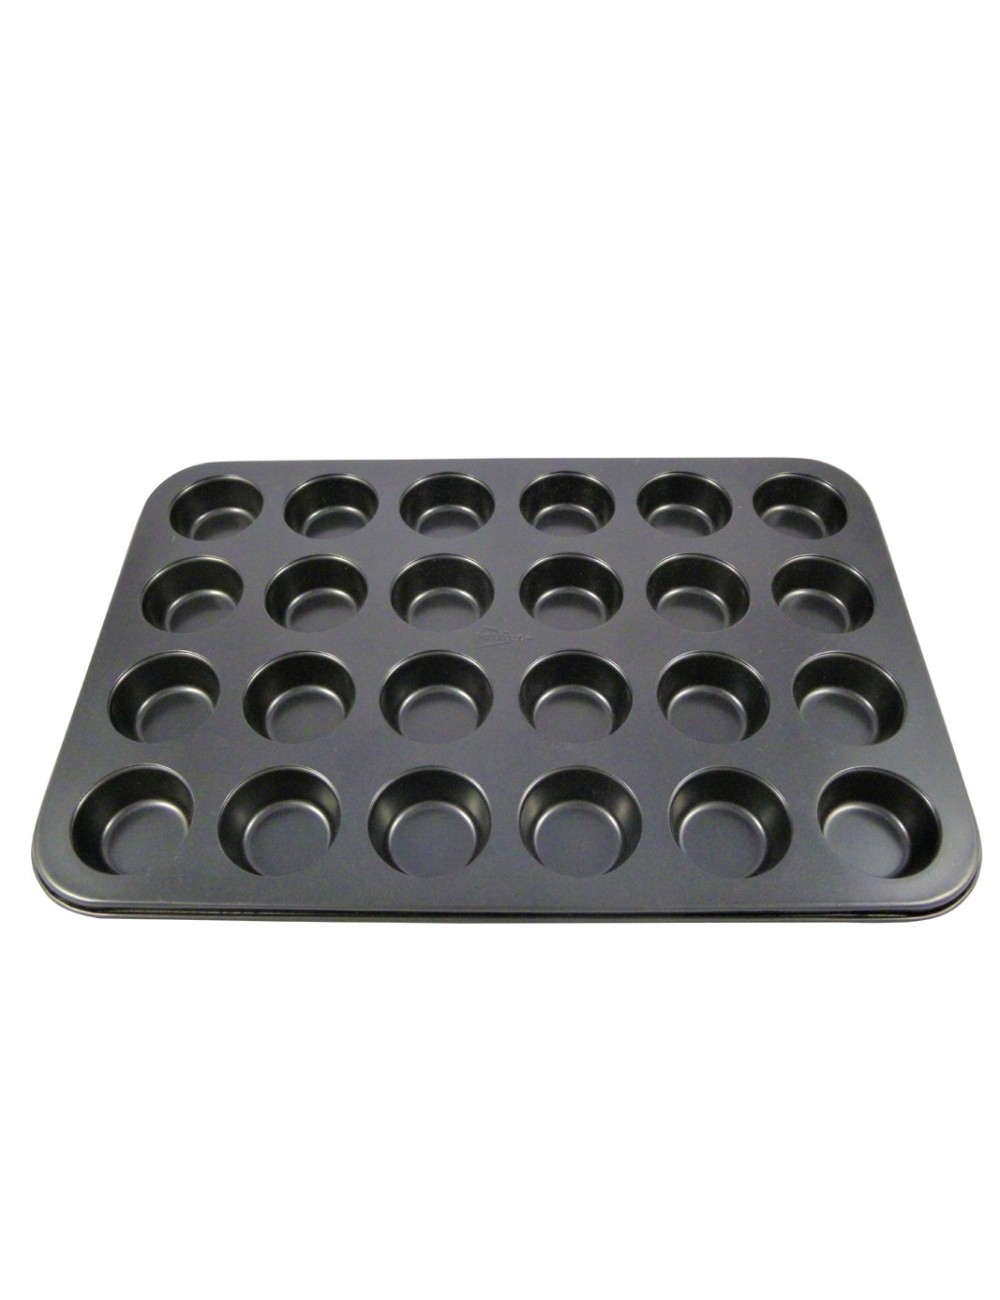 https://www.edehillerin.fr/3161-large_default/plaque-a-mini-muffins-24-cavites-anti-adhesif.jpg